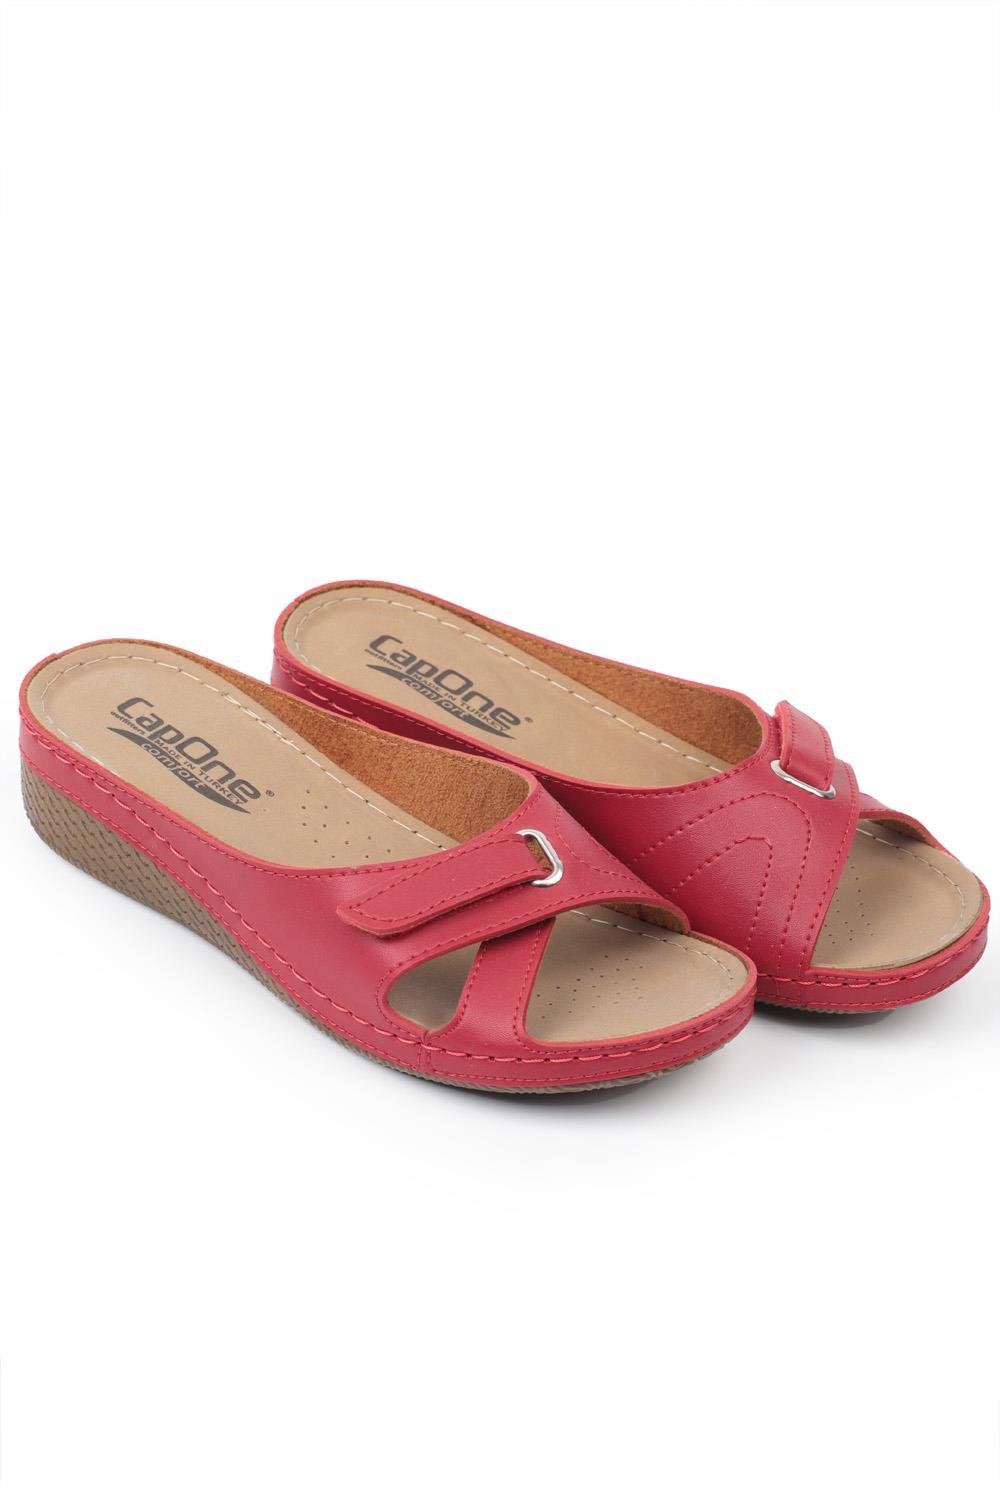 Share 152+ paragon women’s sandals online latest